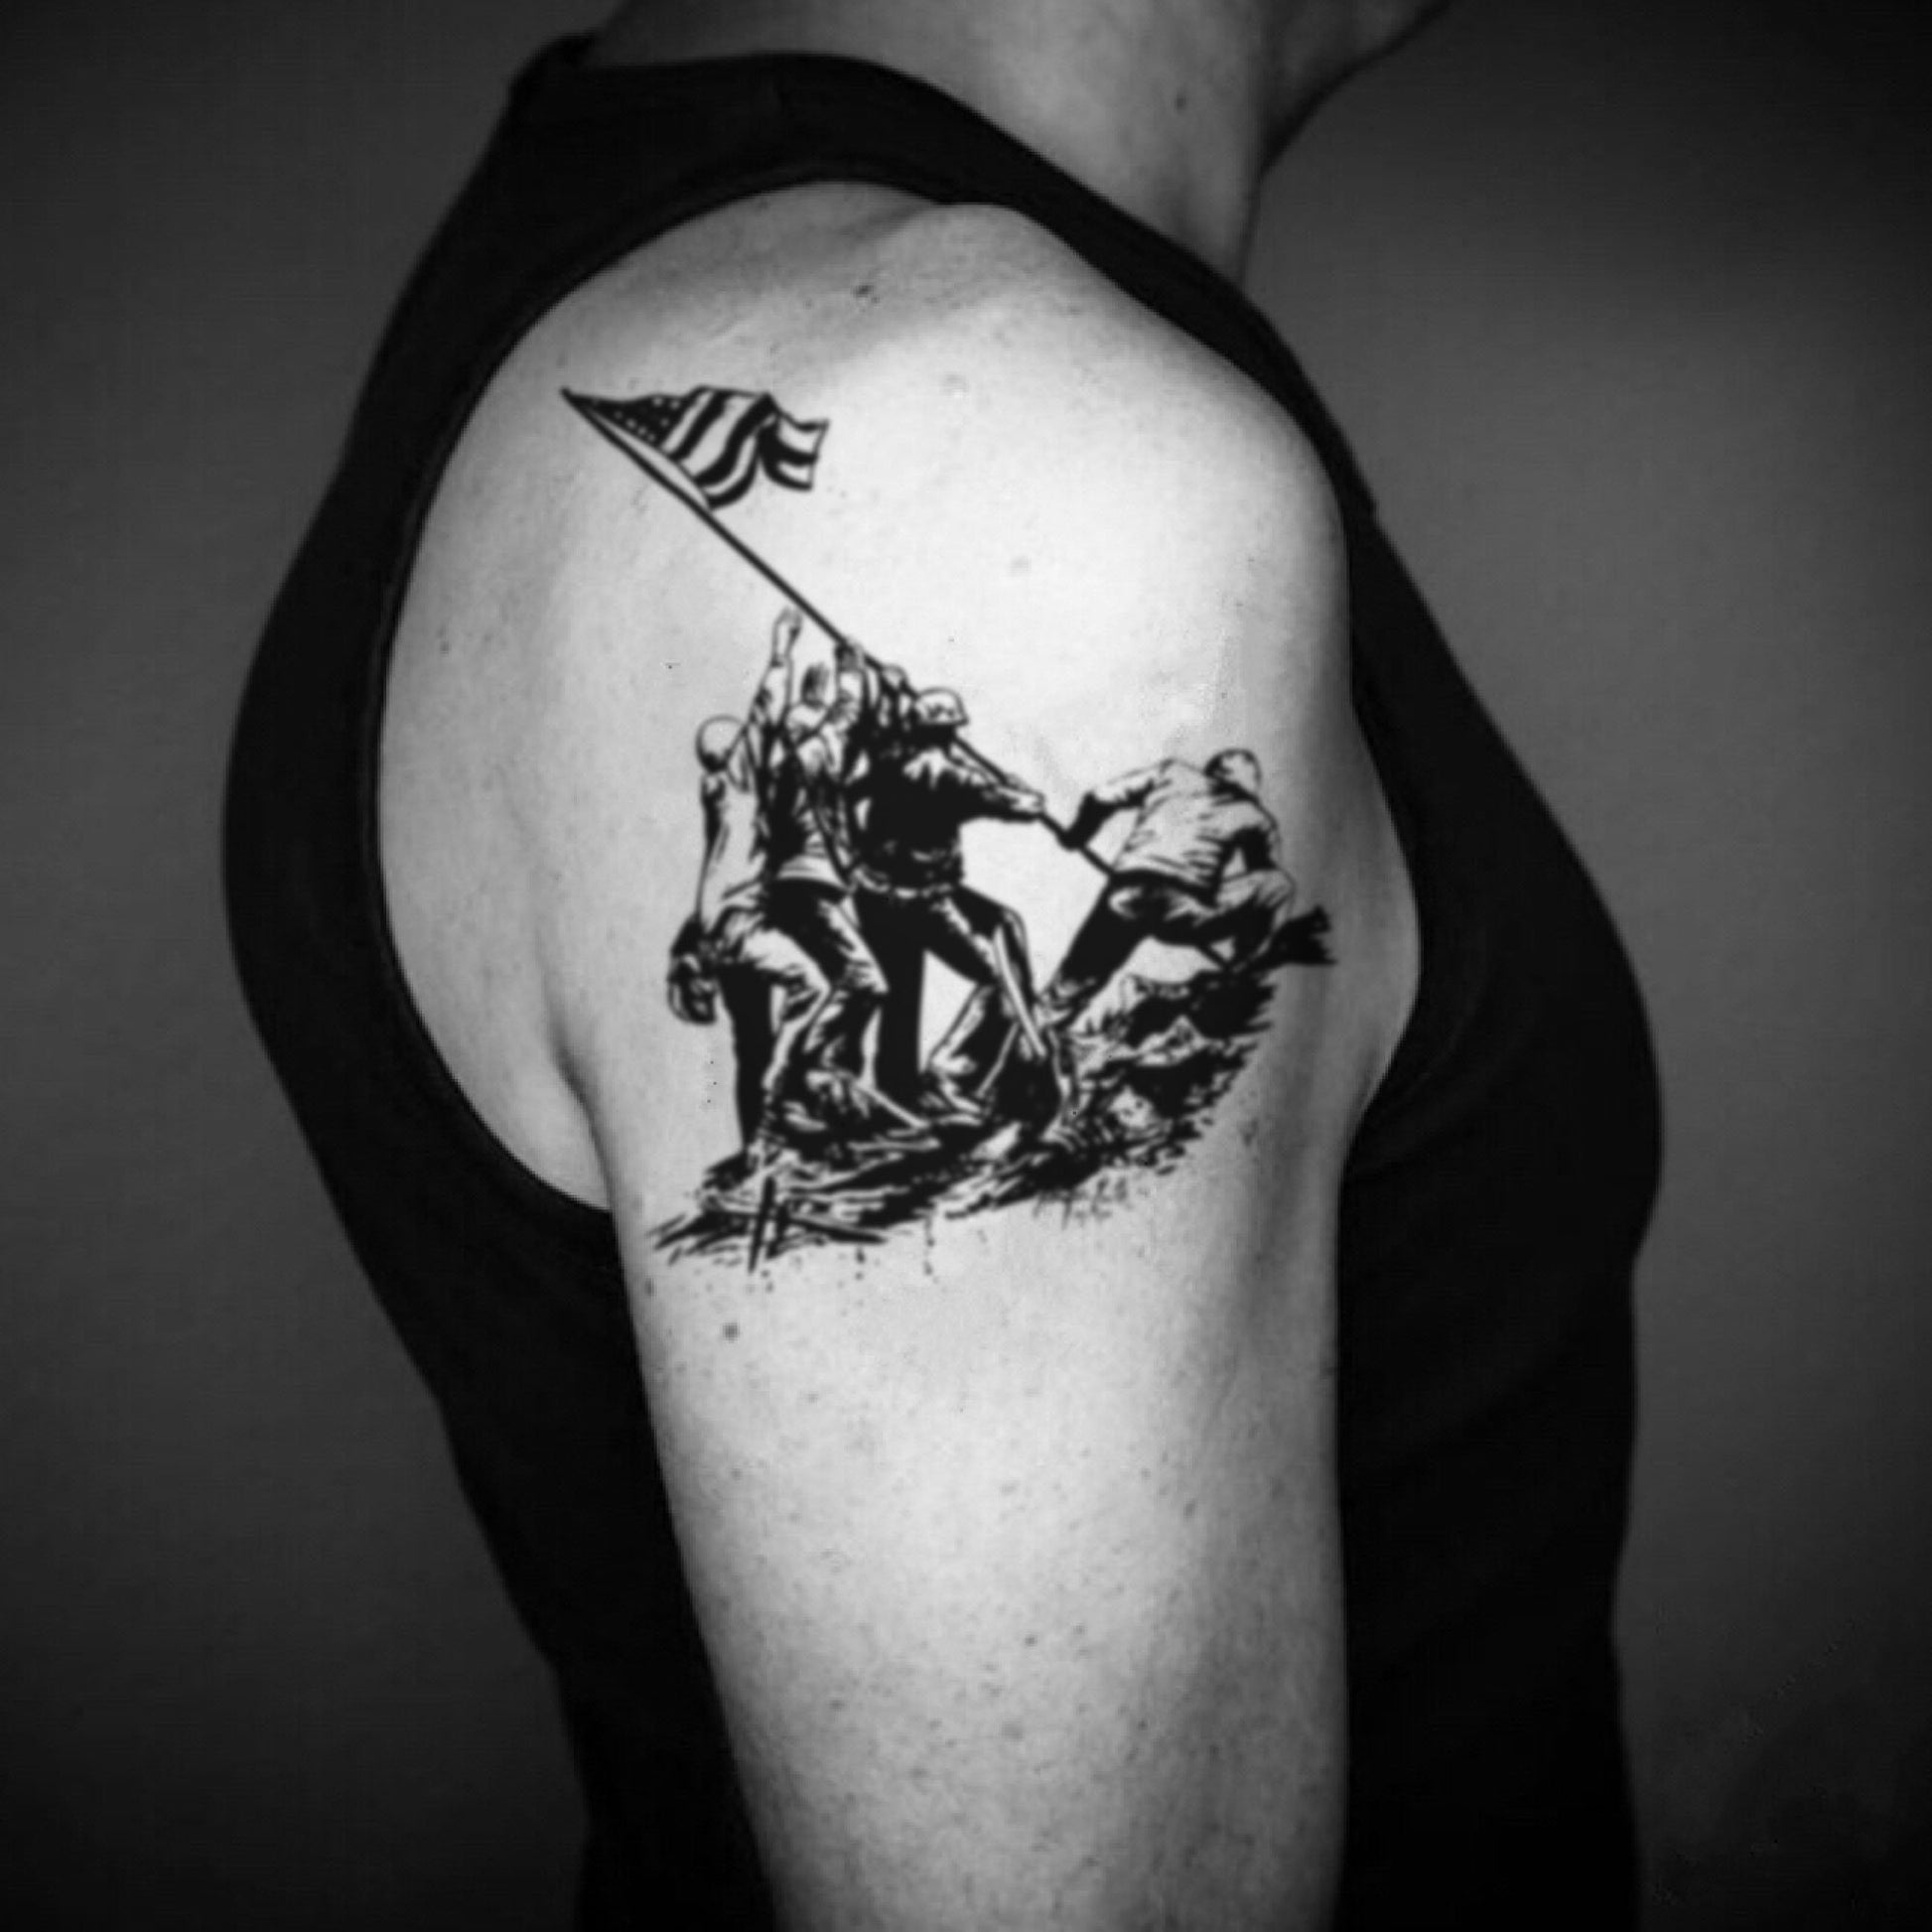 fake big iwo jima flag raising illustrative temporary tattoo sticker design idea on upper arm